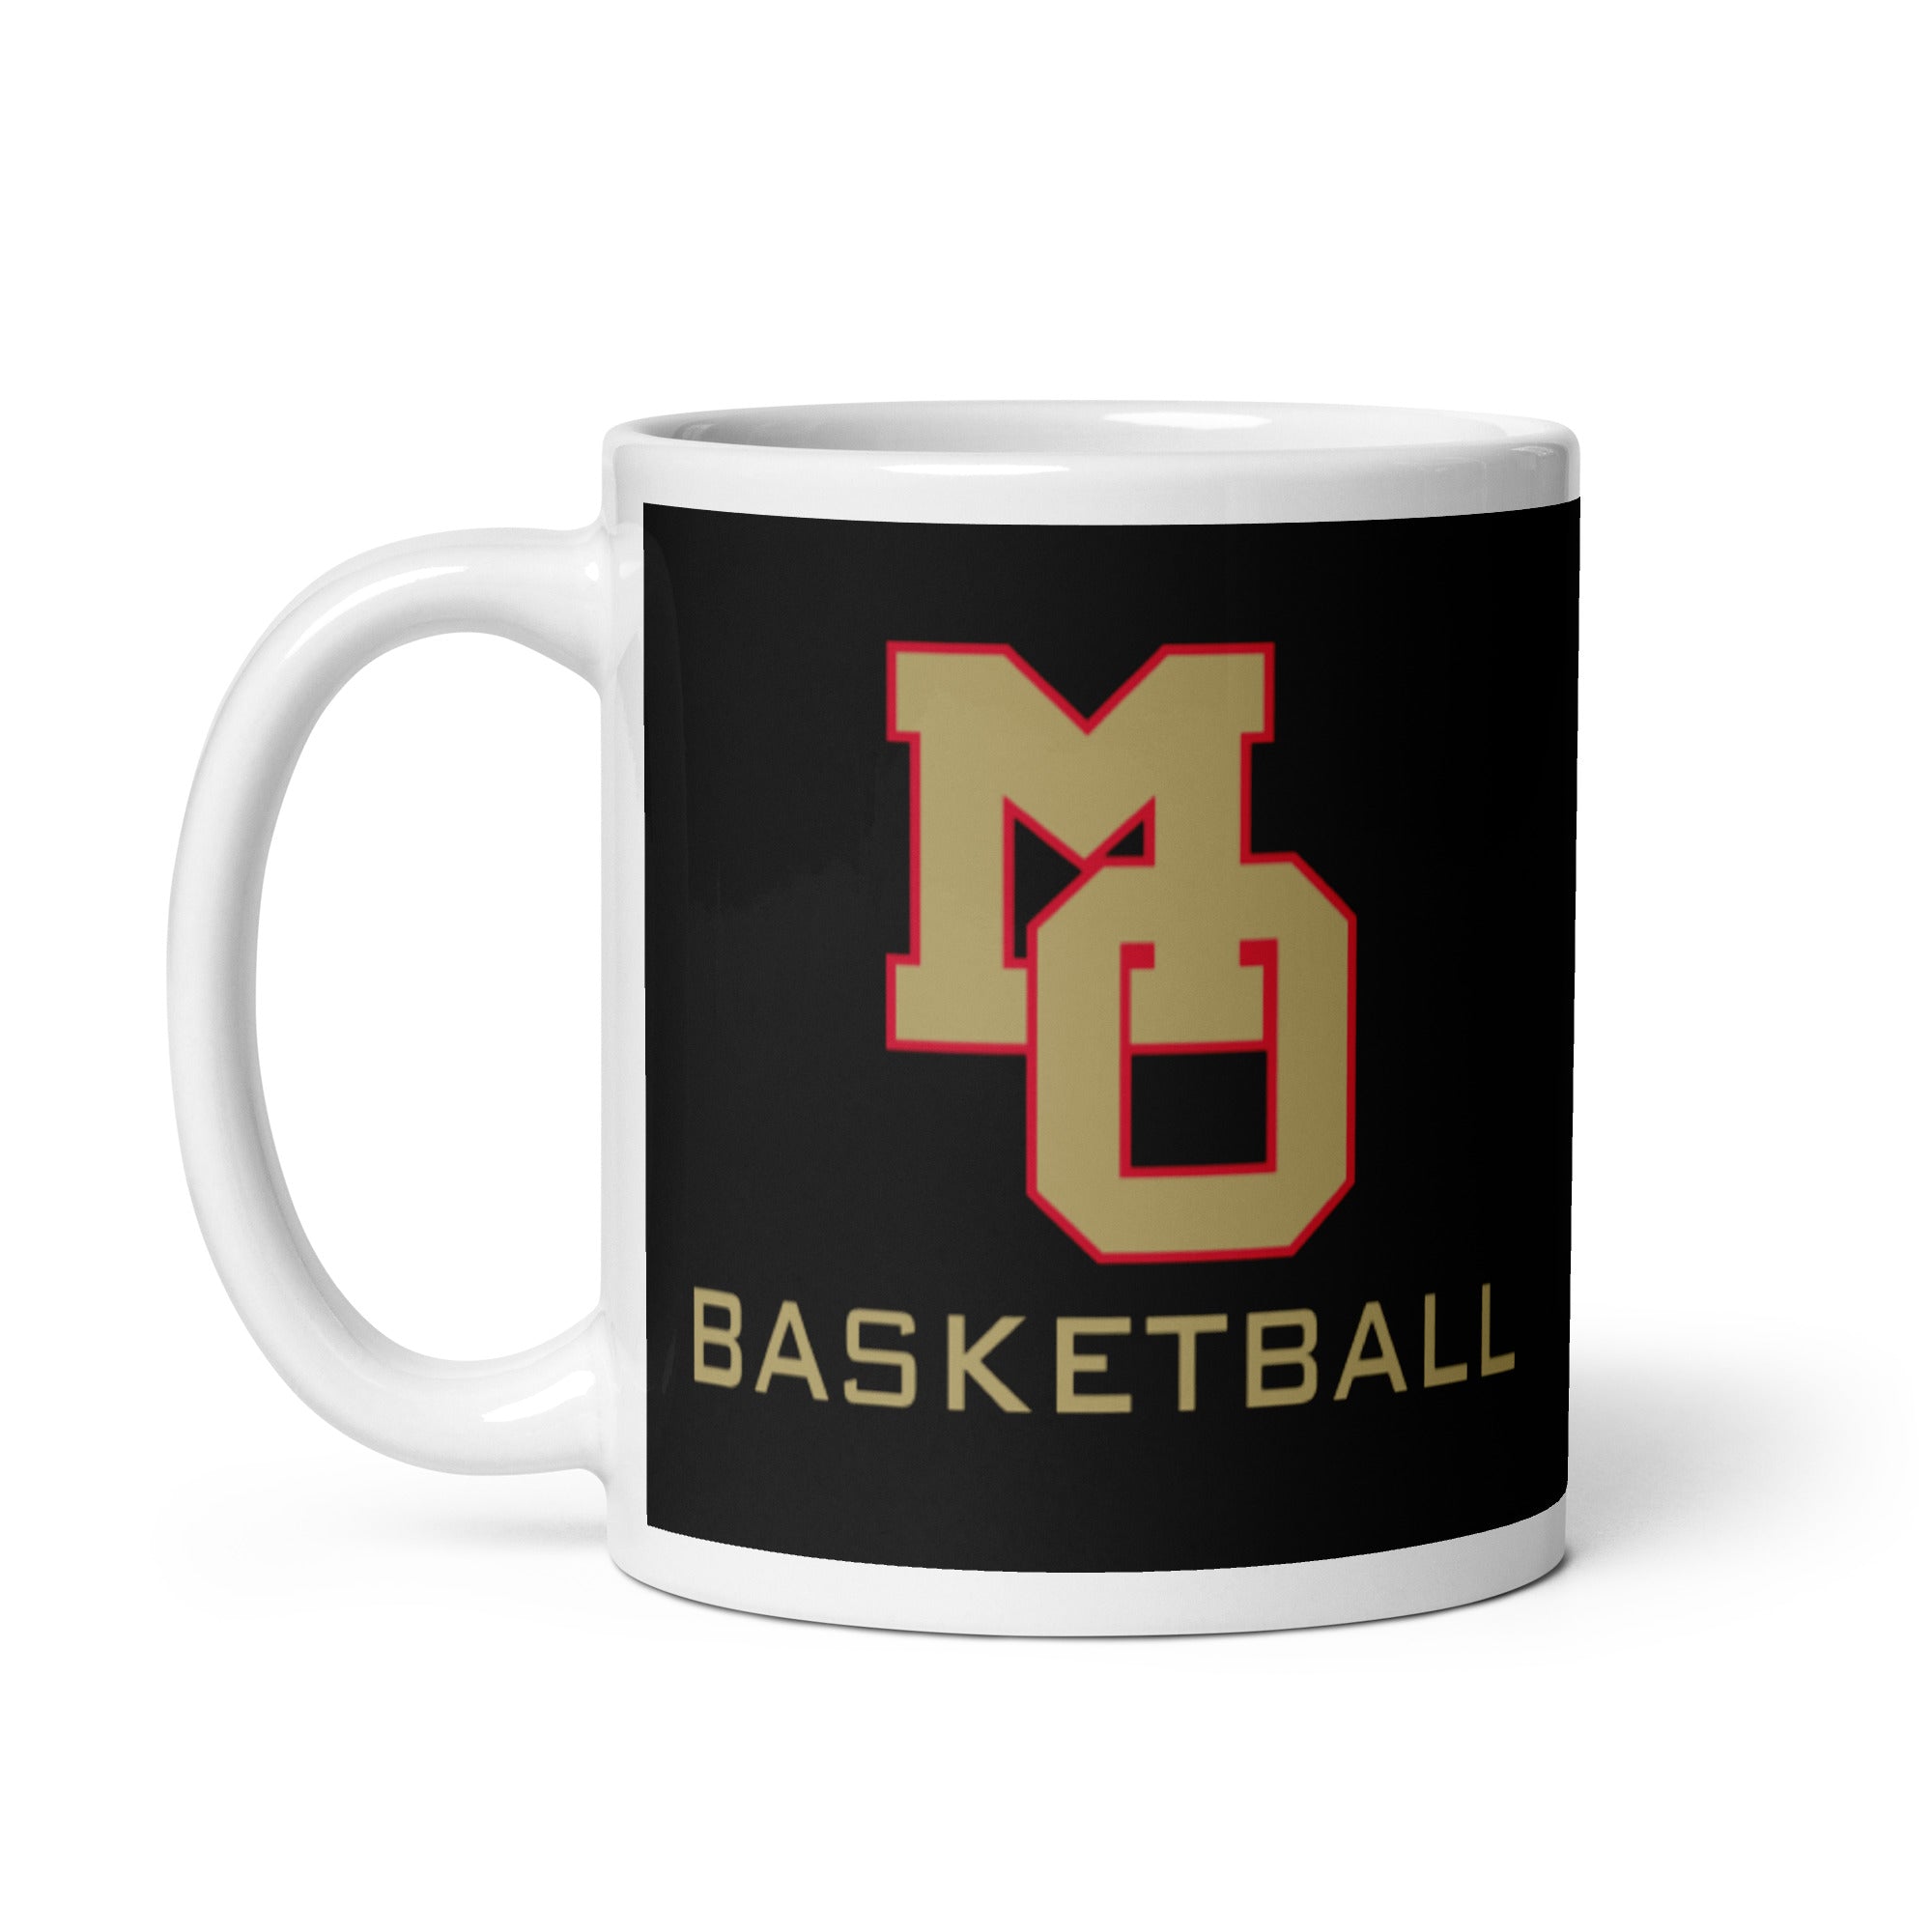 MO White glossy mug